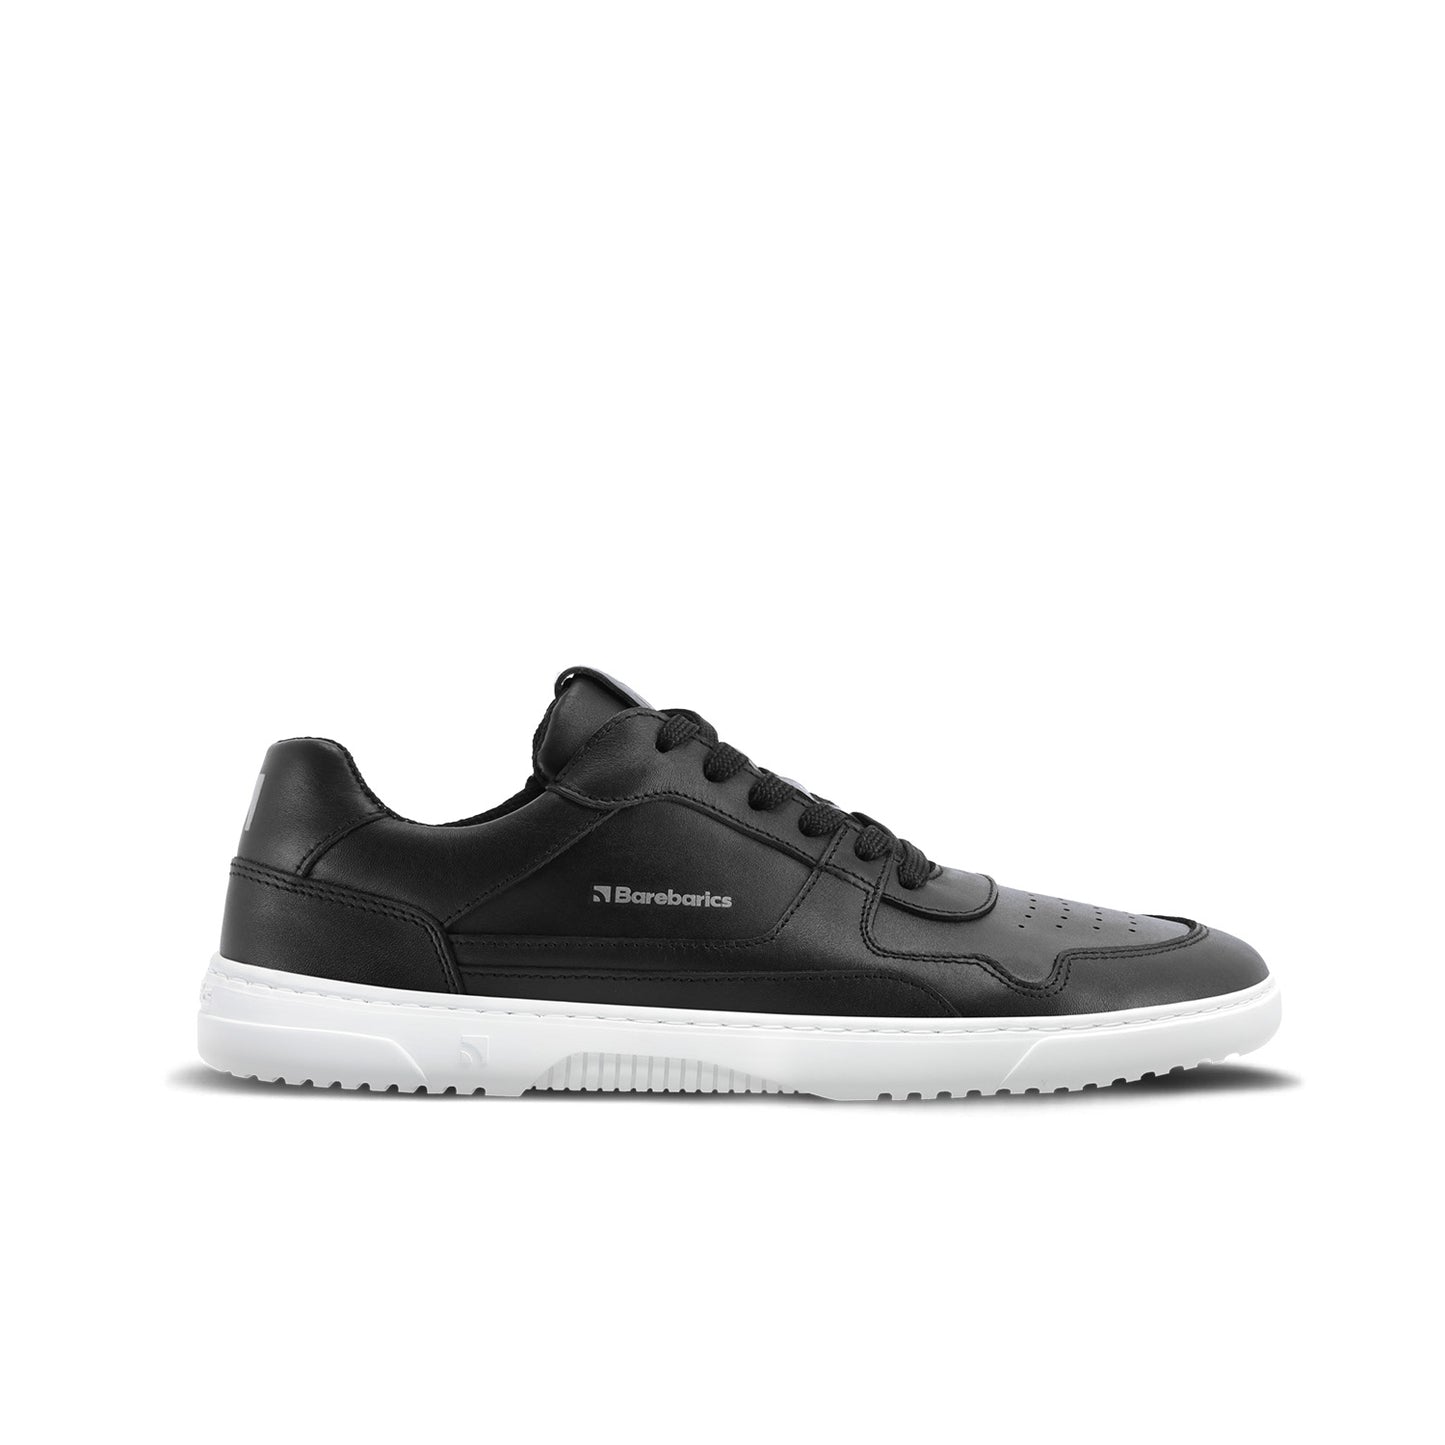 Barebarics Zing Barefoot Sneakers - Black & White (Leather)